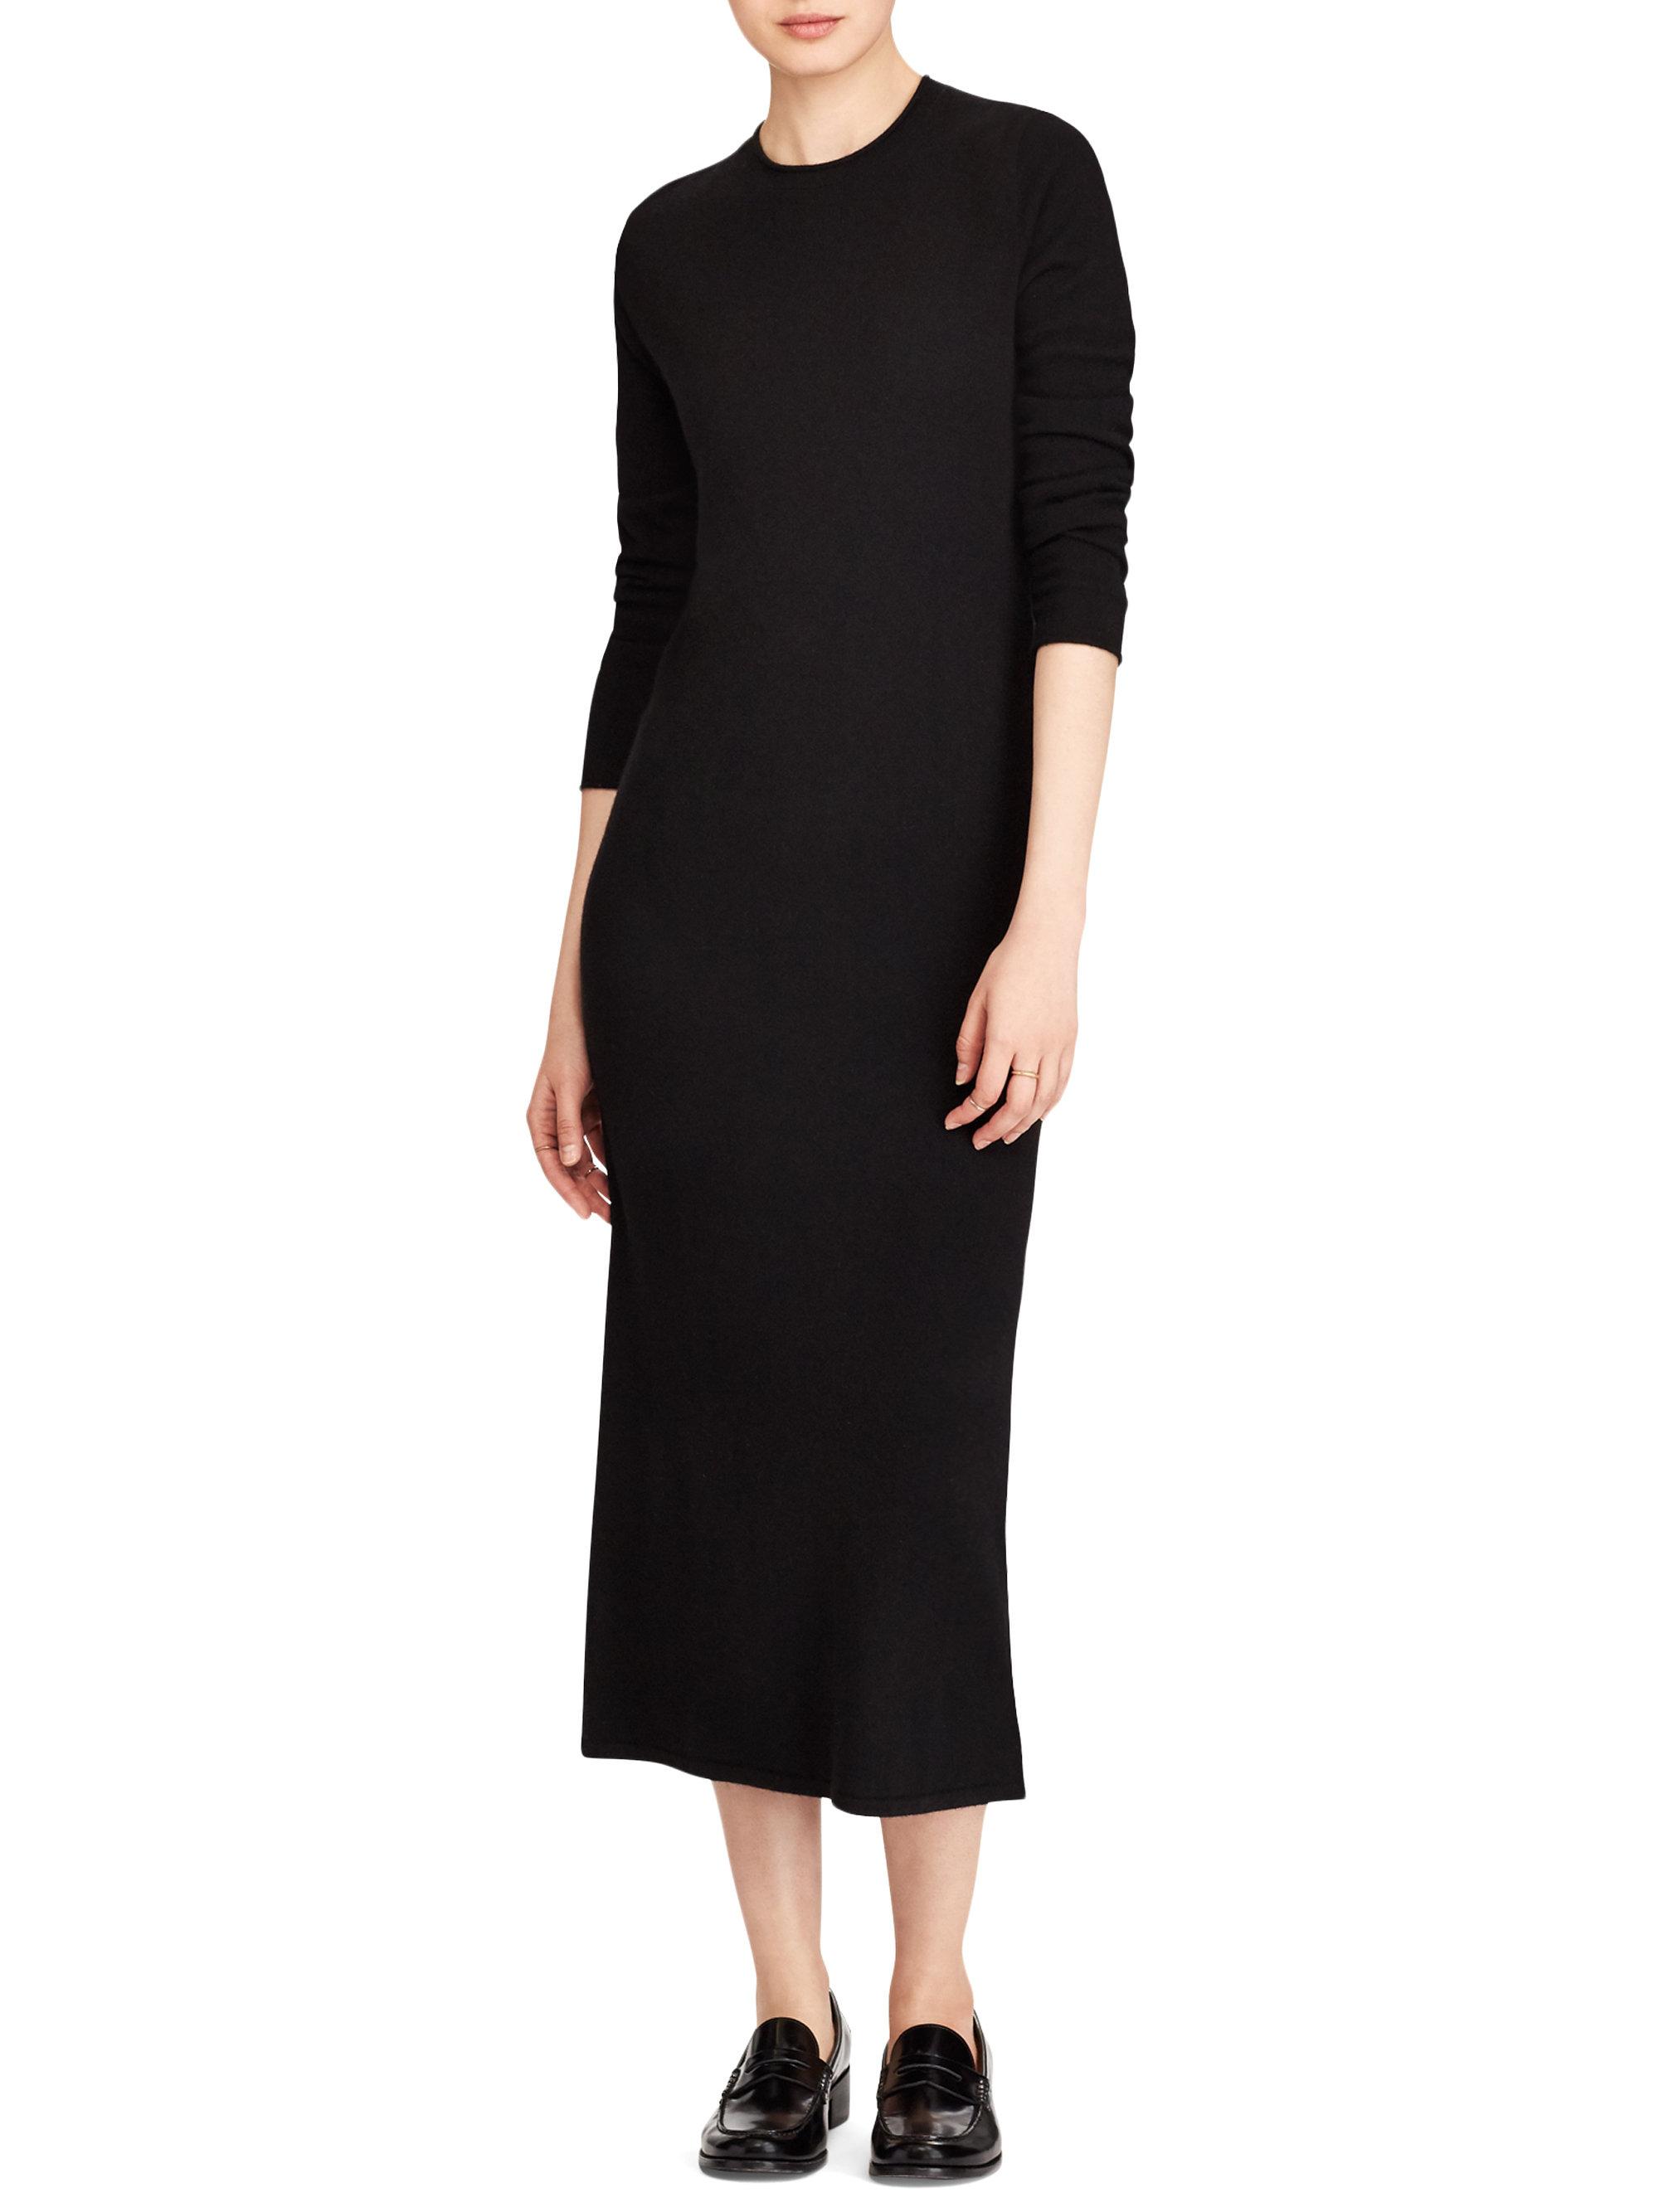 Lyst - Polo Ralph Lauren Long Cashmere Dress in Black